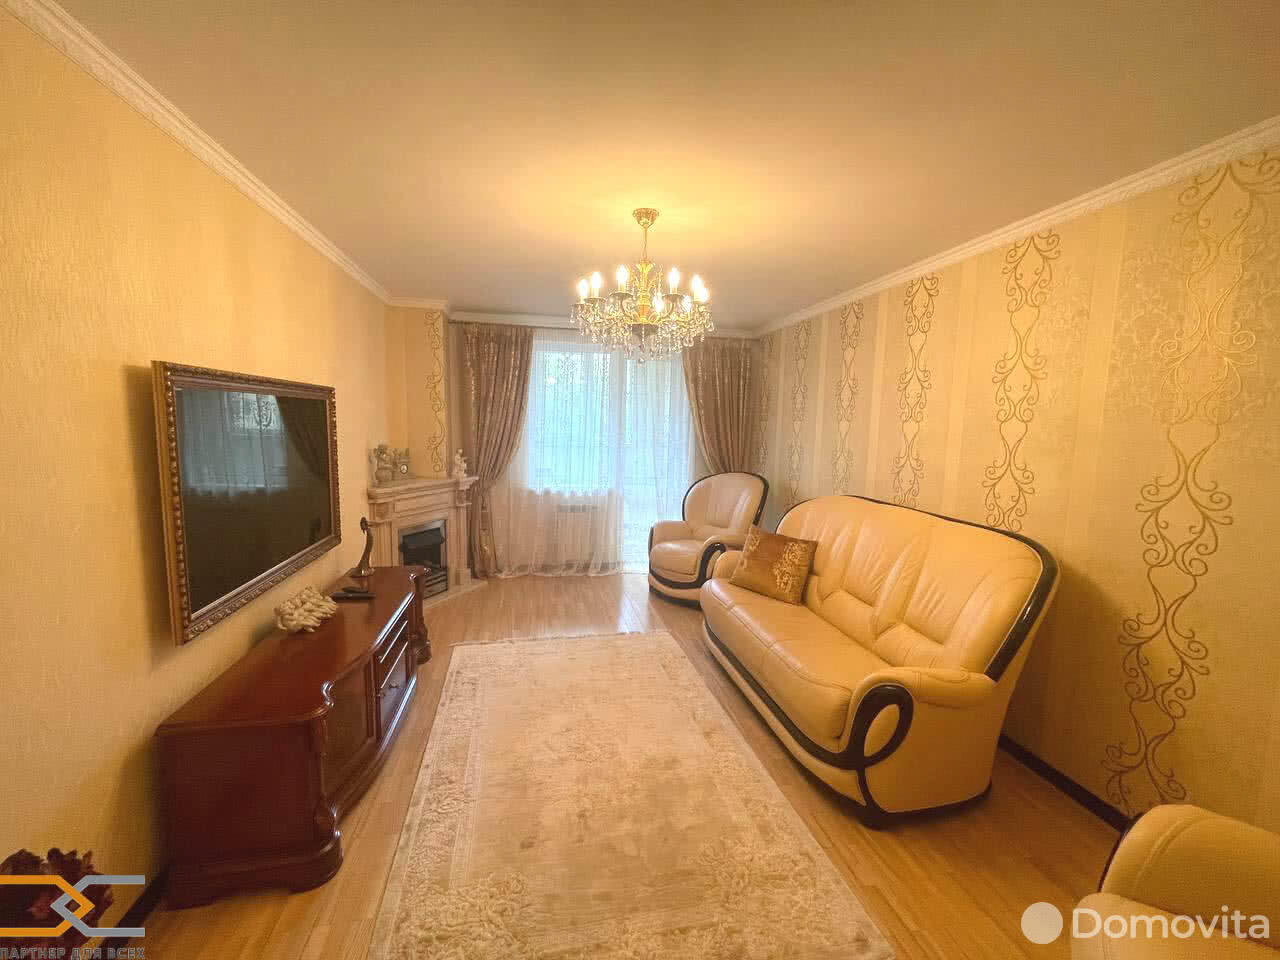 квартира, Минск, ул. Болеслава Берута, д. 11А, стоимость аренды 3 085 р./мес.